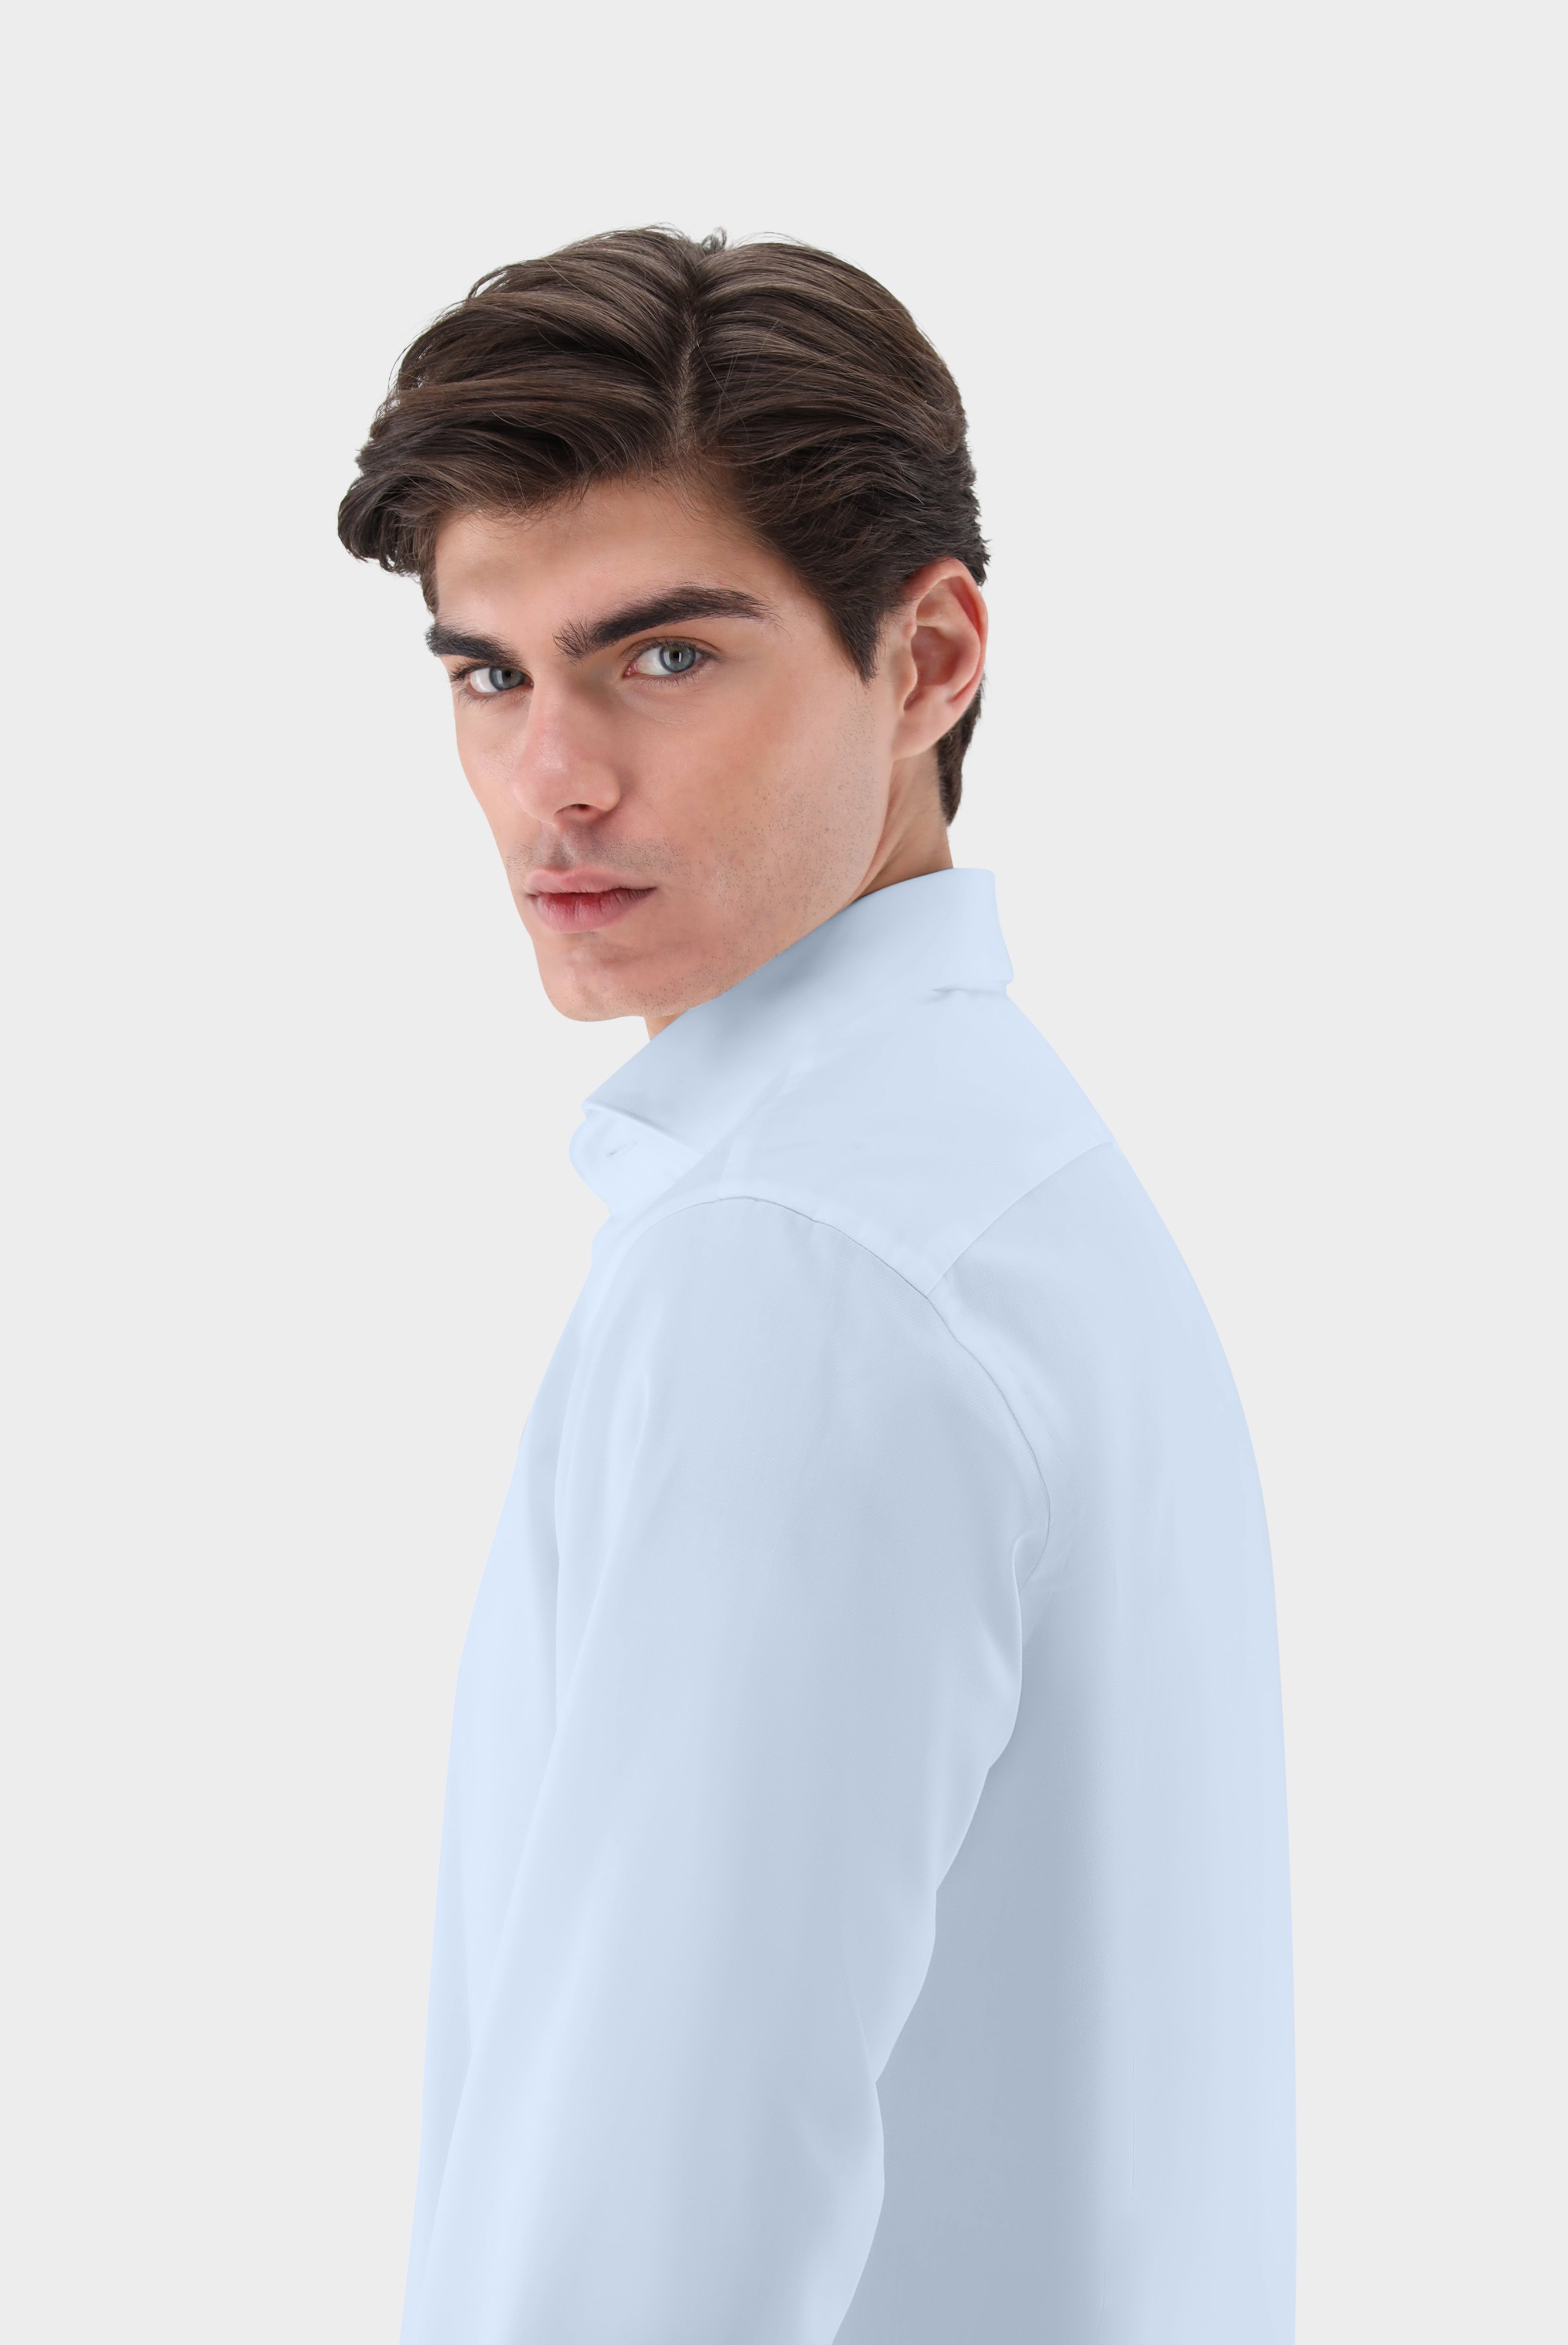 Business Hemden+Hemd mit Strukturmuster in Sartoriale Verarbeitung Tailor Fit+20.2502.NV.151209.730.38